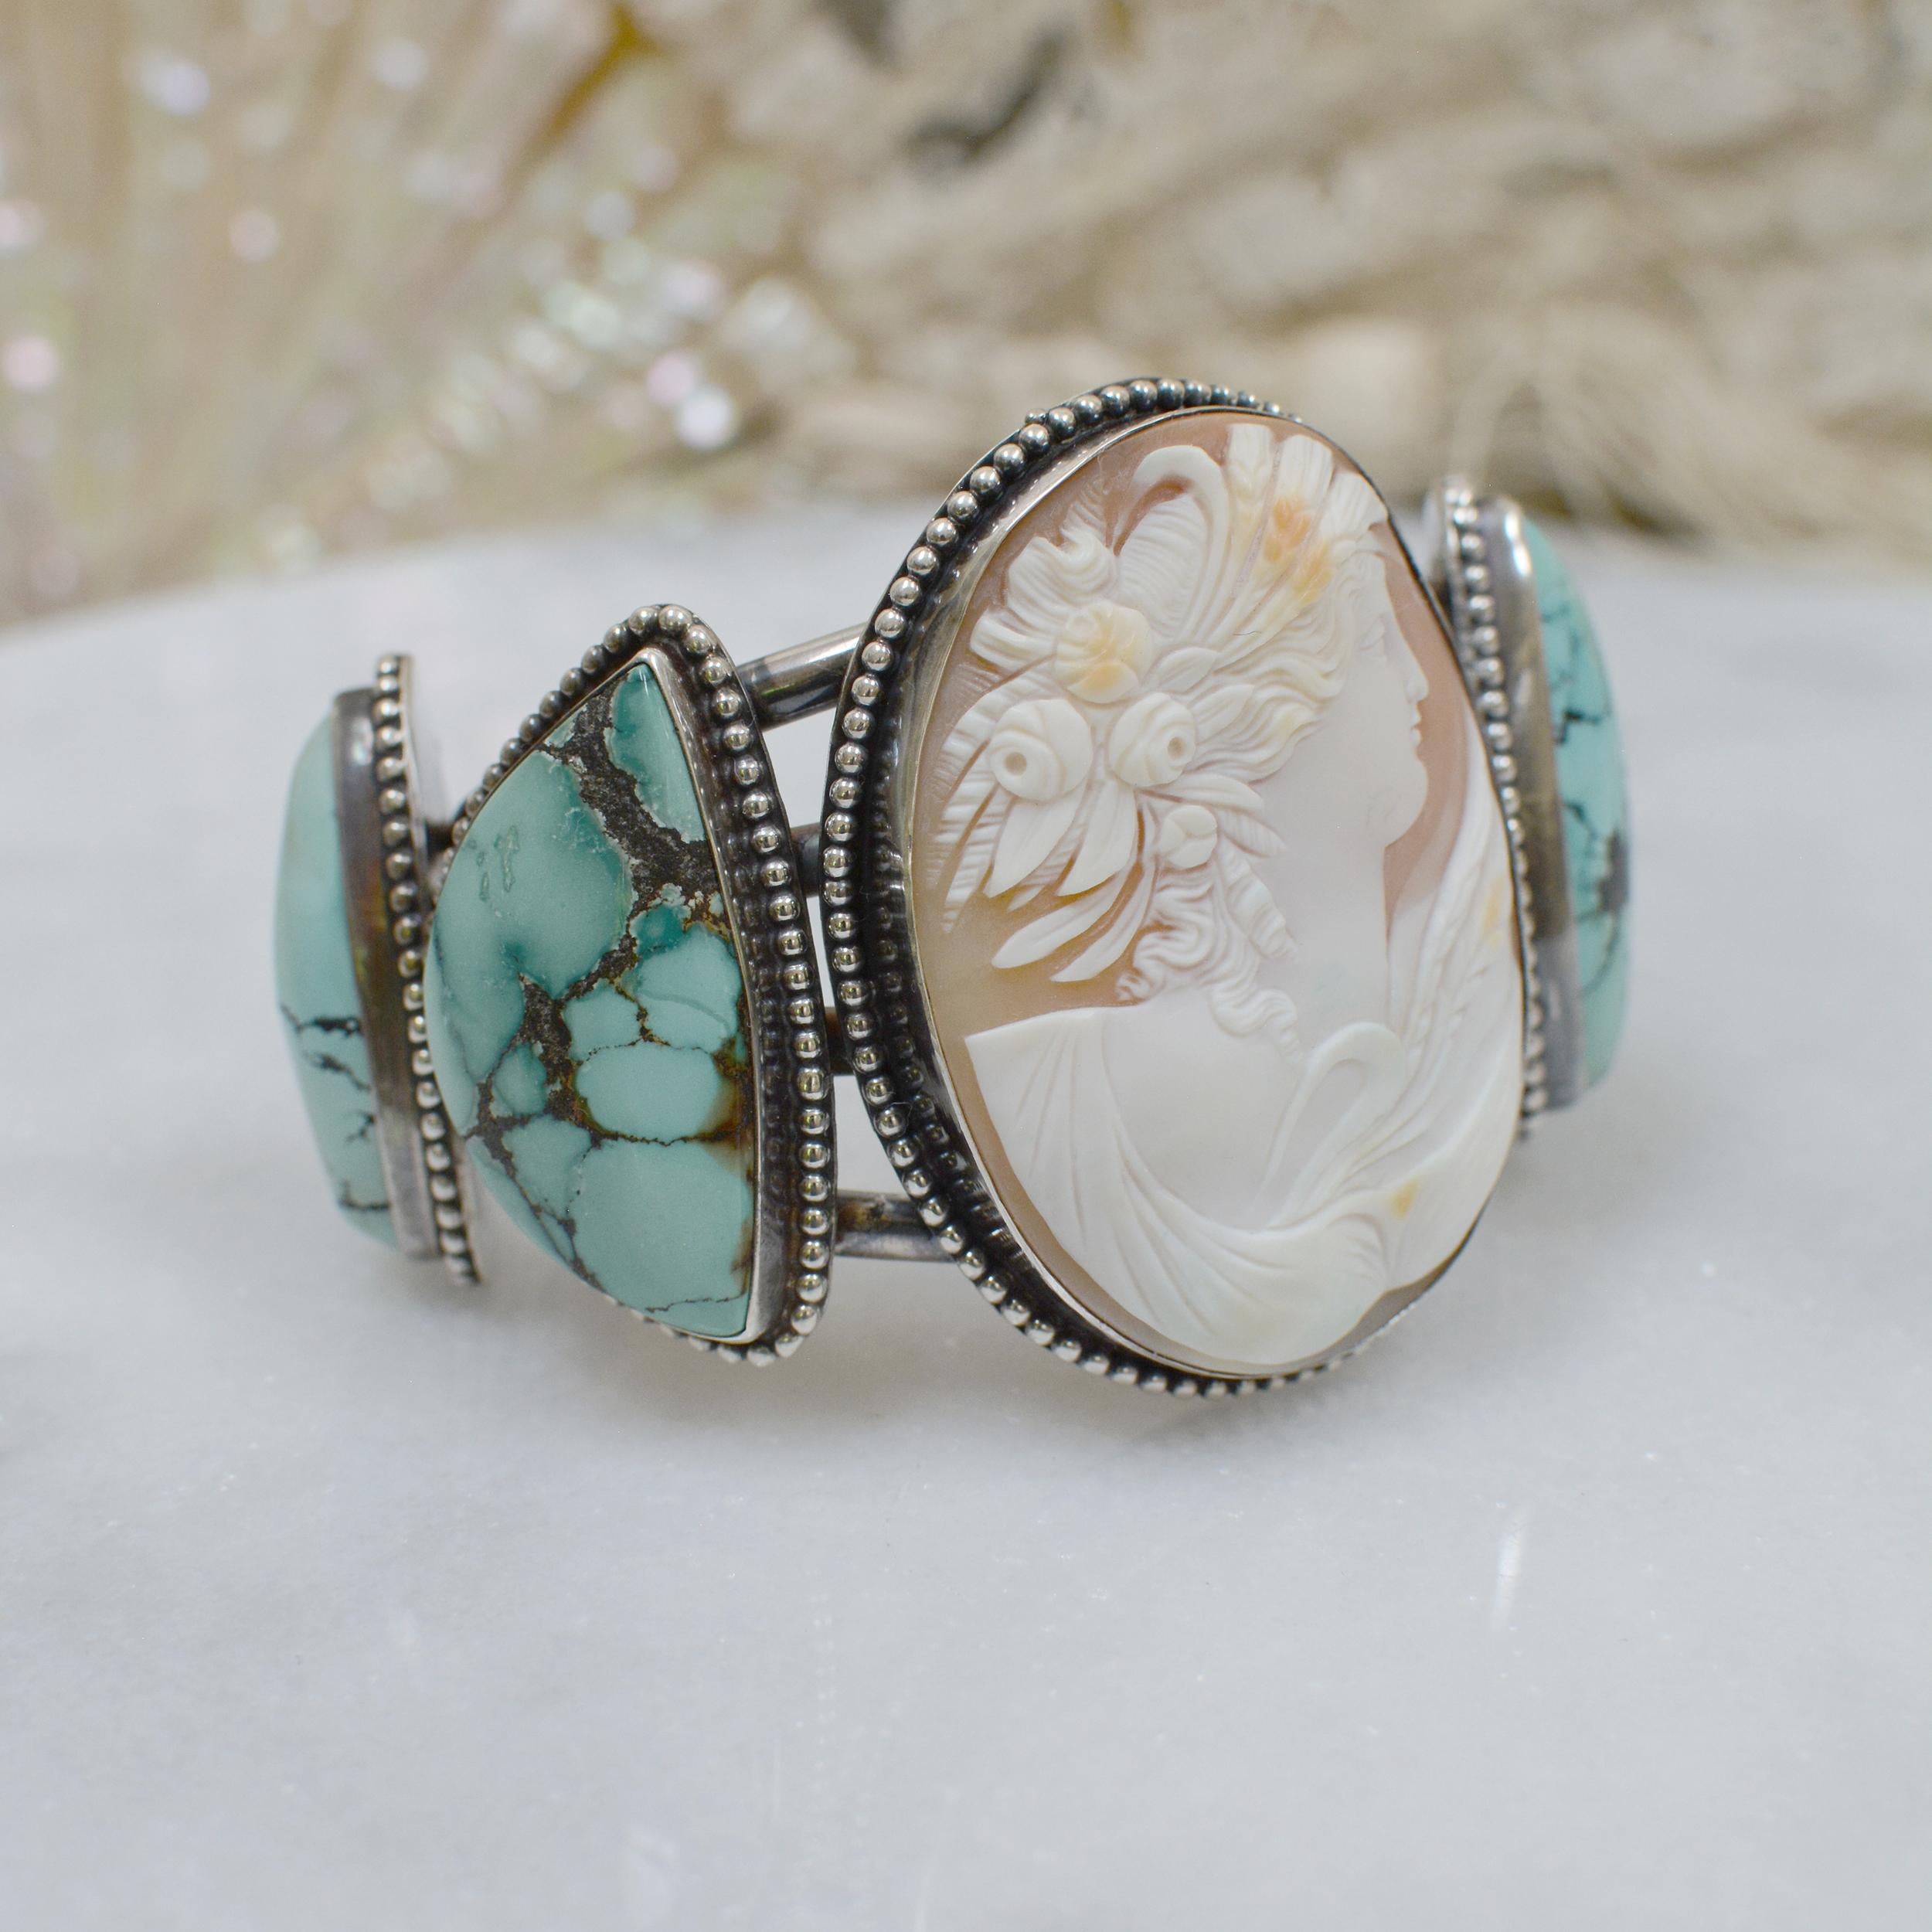 Jill Garber Antique Cameo Cuff Bracelet Depicting Goddess Leda with Turquoise 3